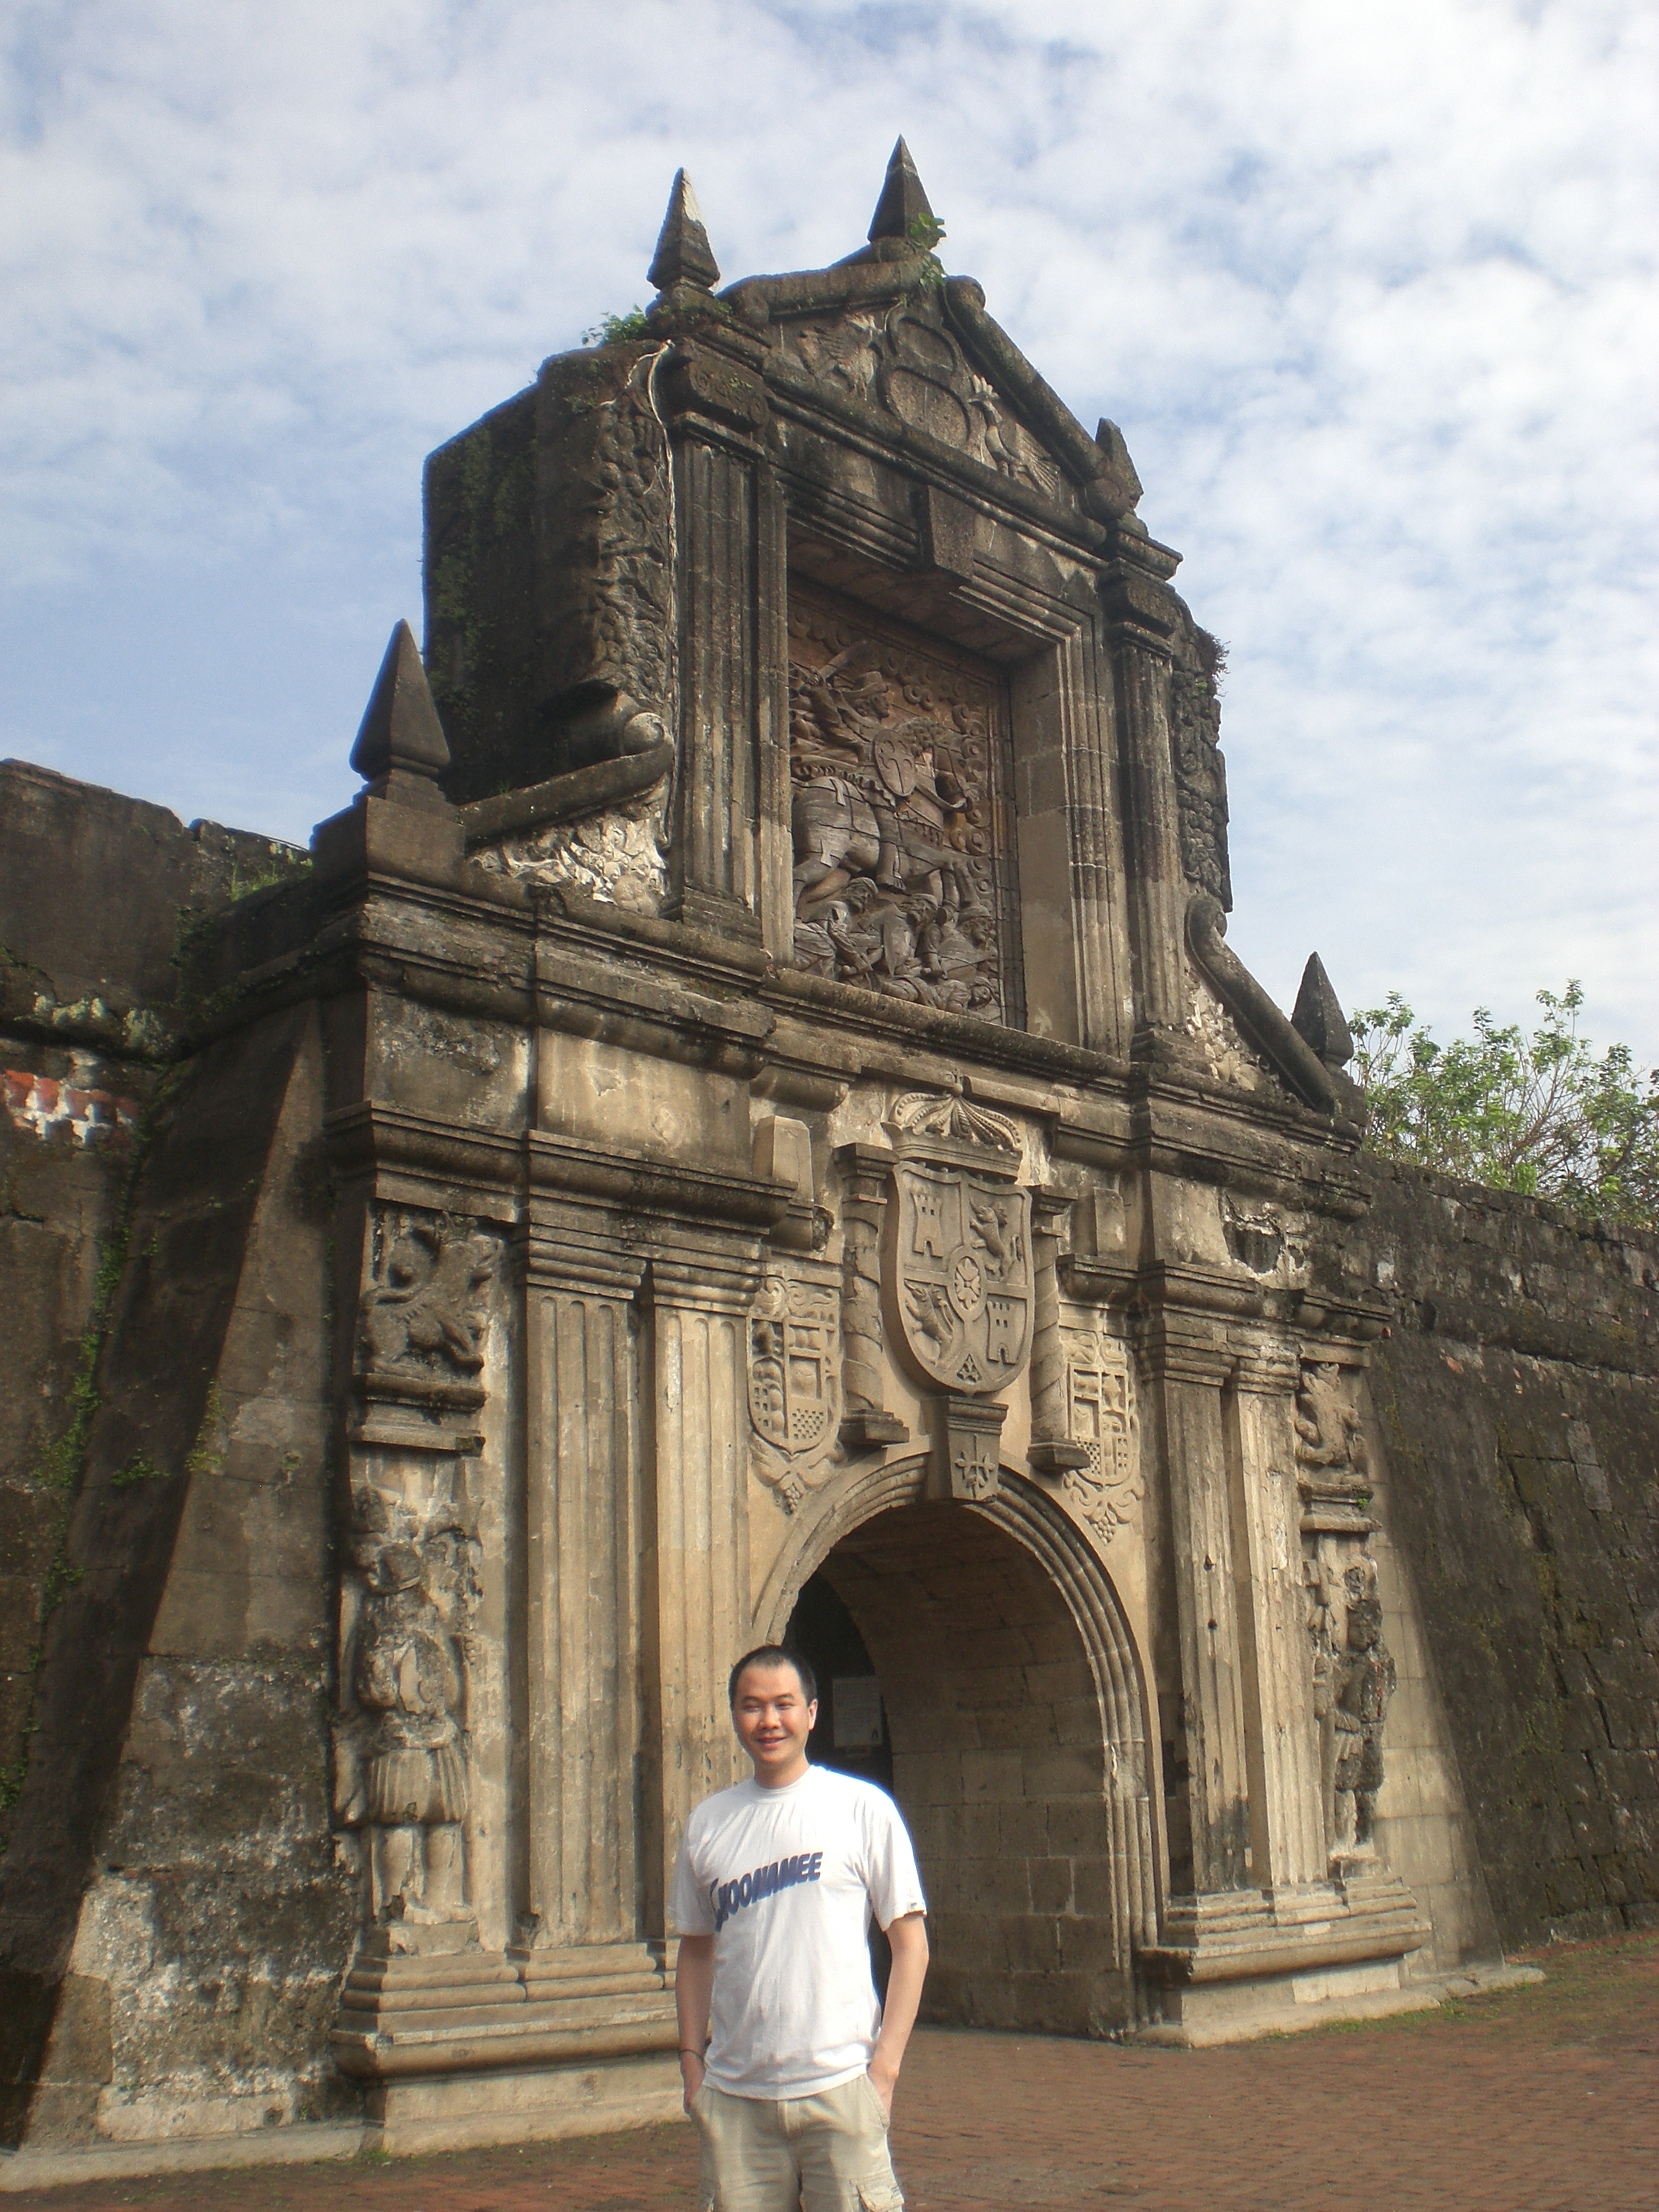 Strolling around historic Manila